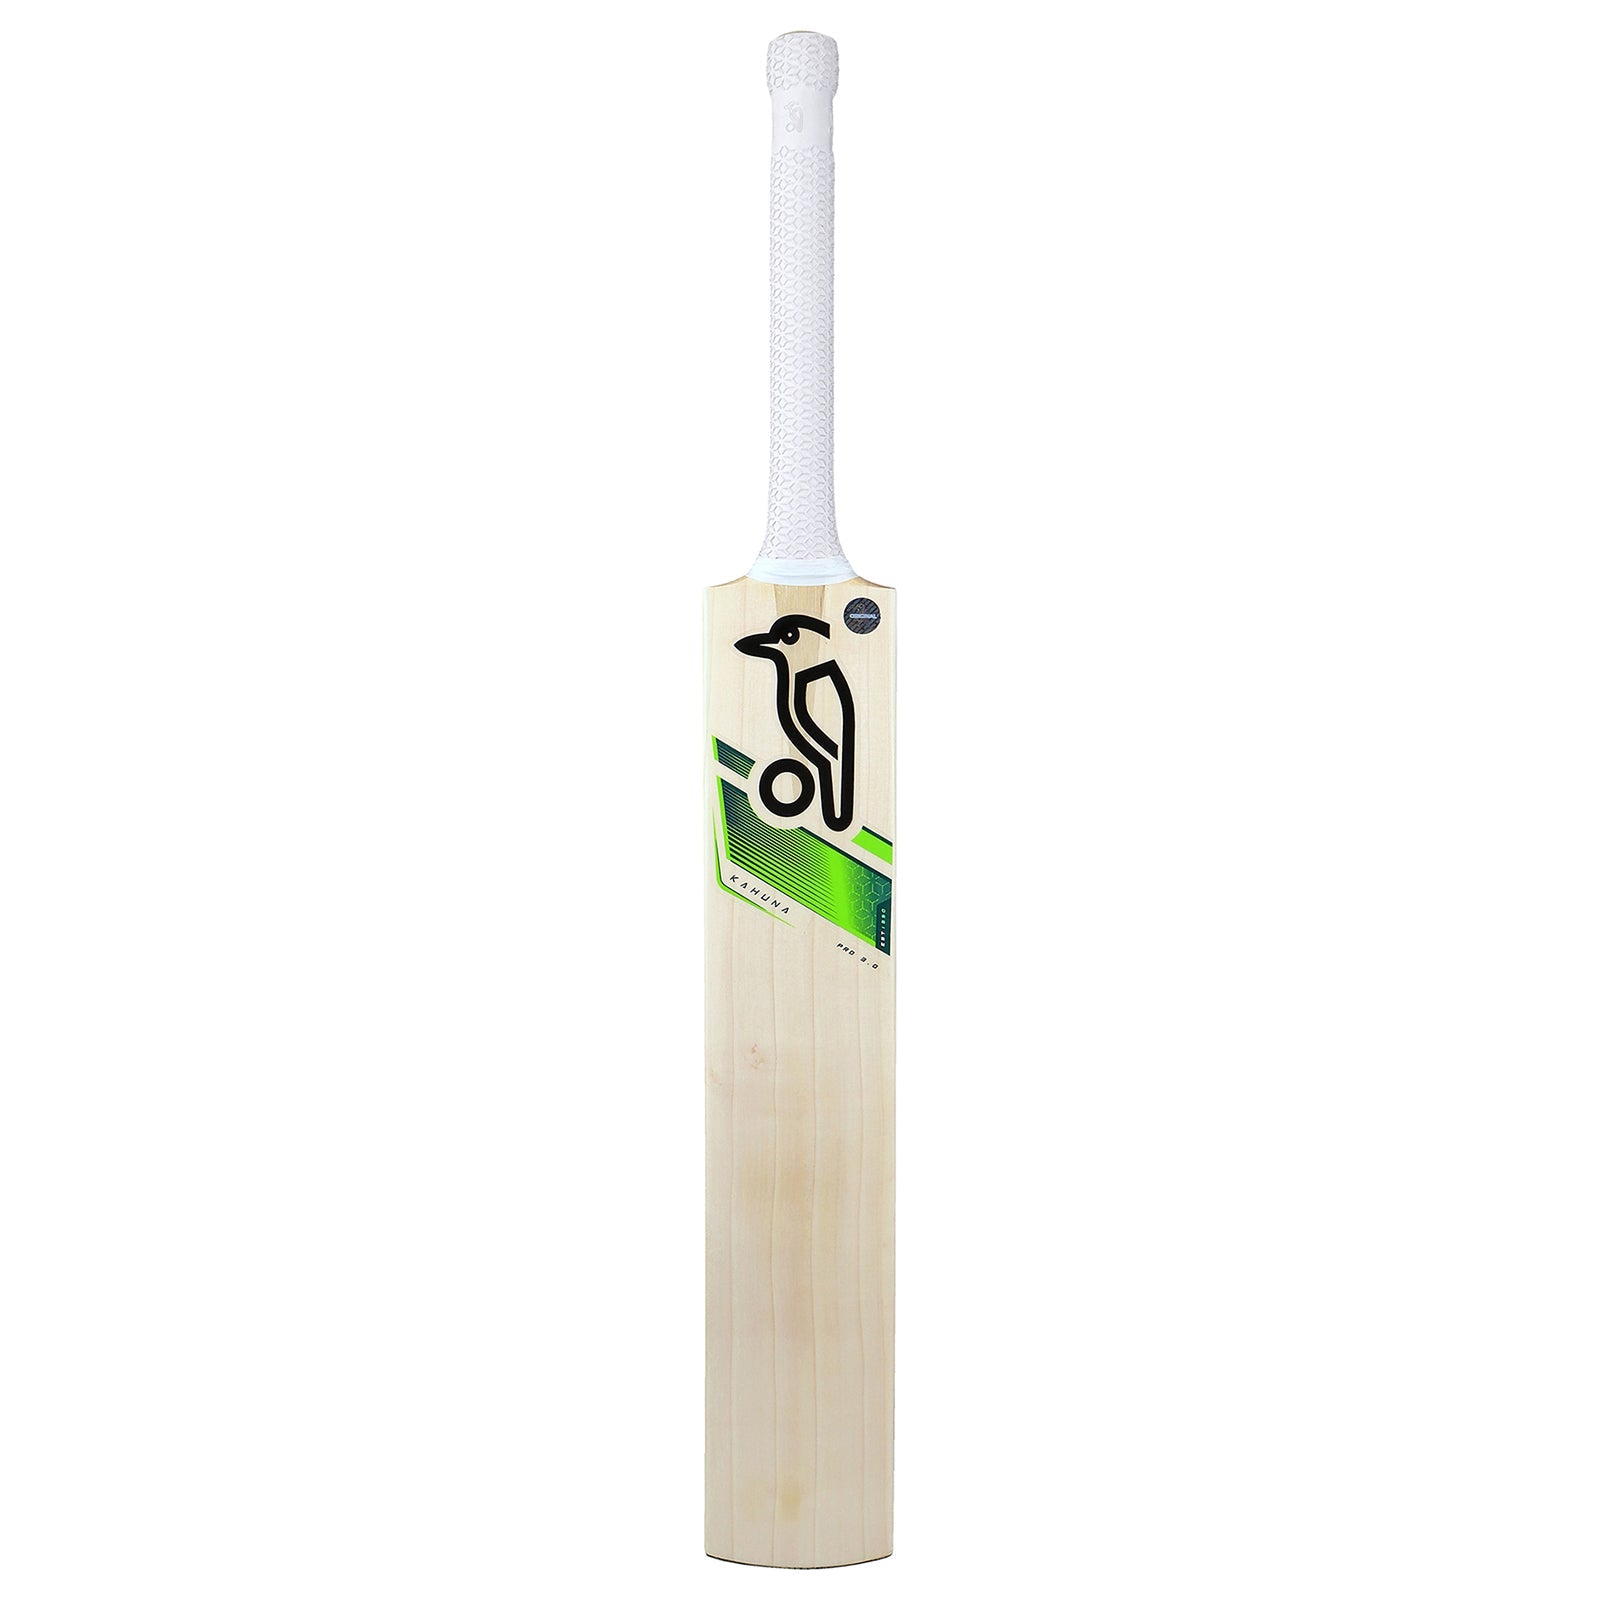 Kookaburra Kahuna Pro 3.0 Cricket Bat - Size 6